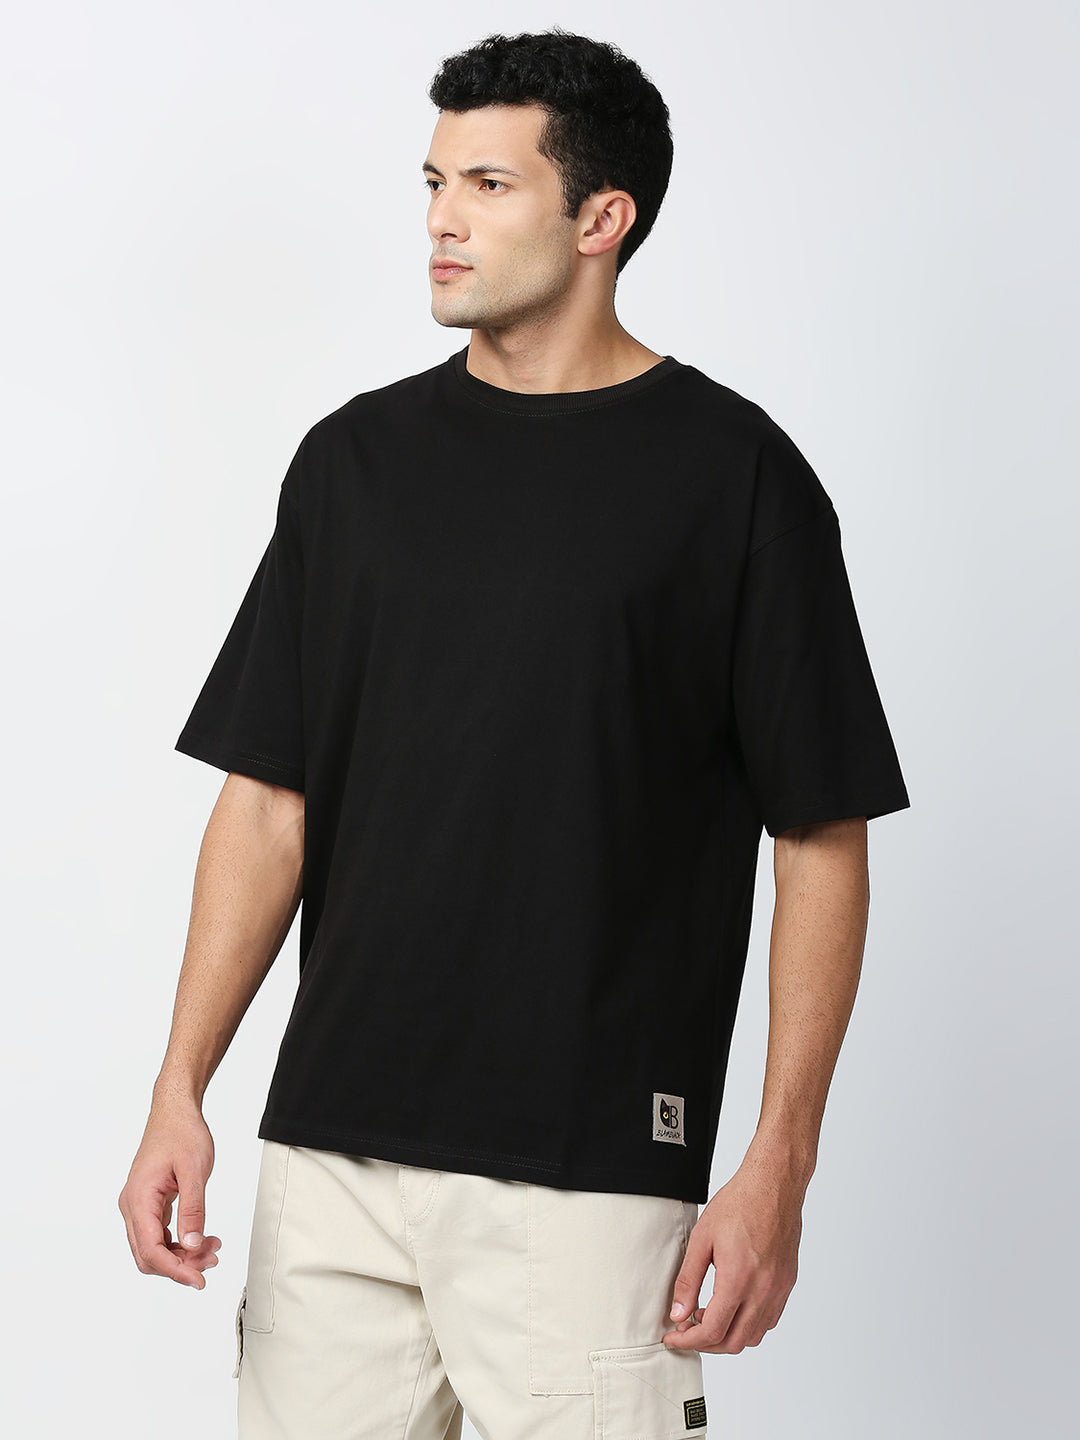 Buy Blamblack Men's Baggy Black Color Back Printed Round Neck T-Shirt